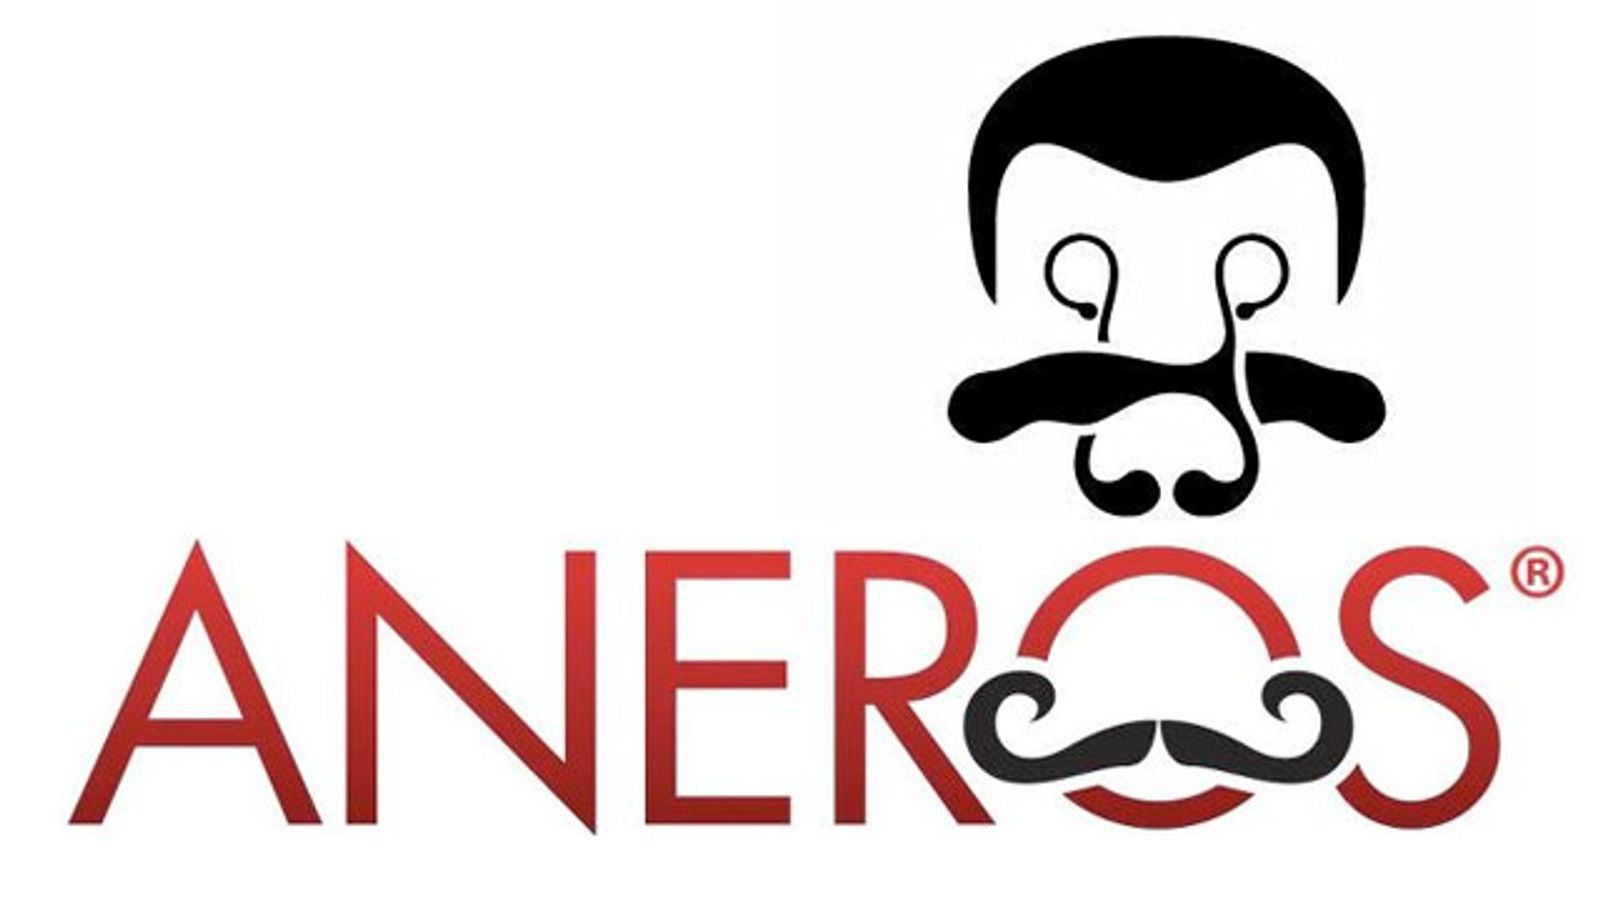 Team Aneros Joins Movember To Raise Money For Men’s Heath